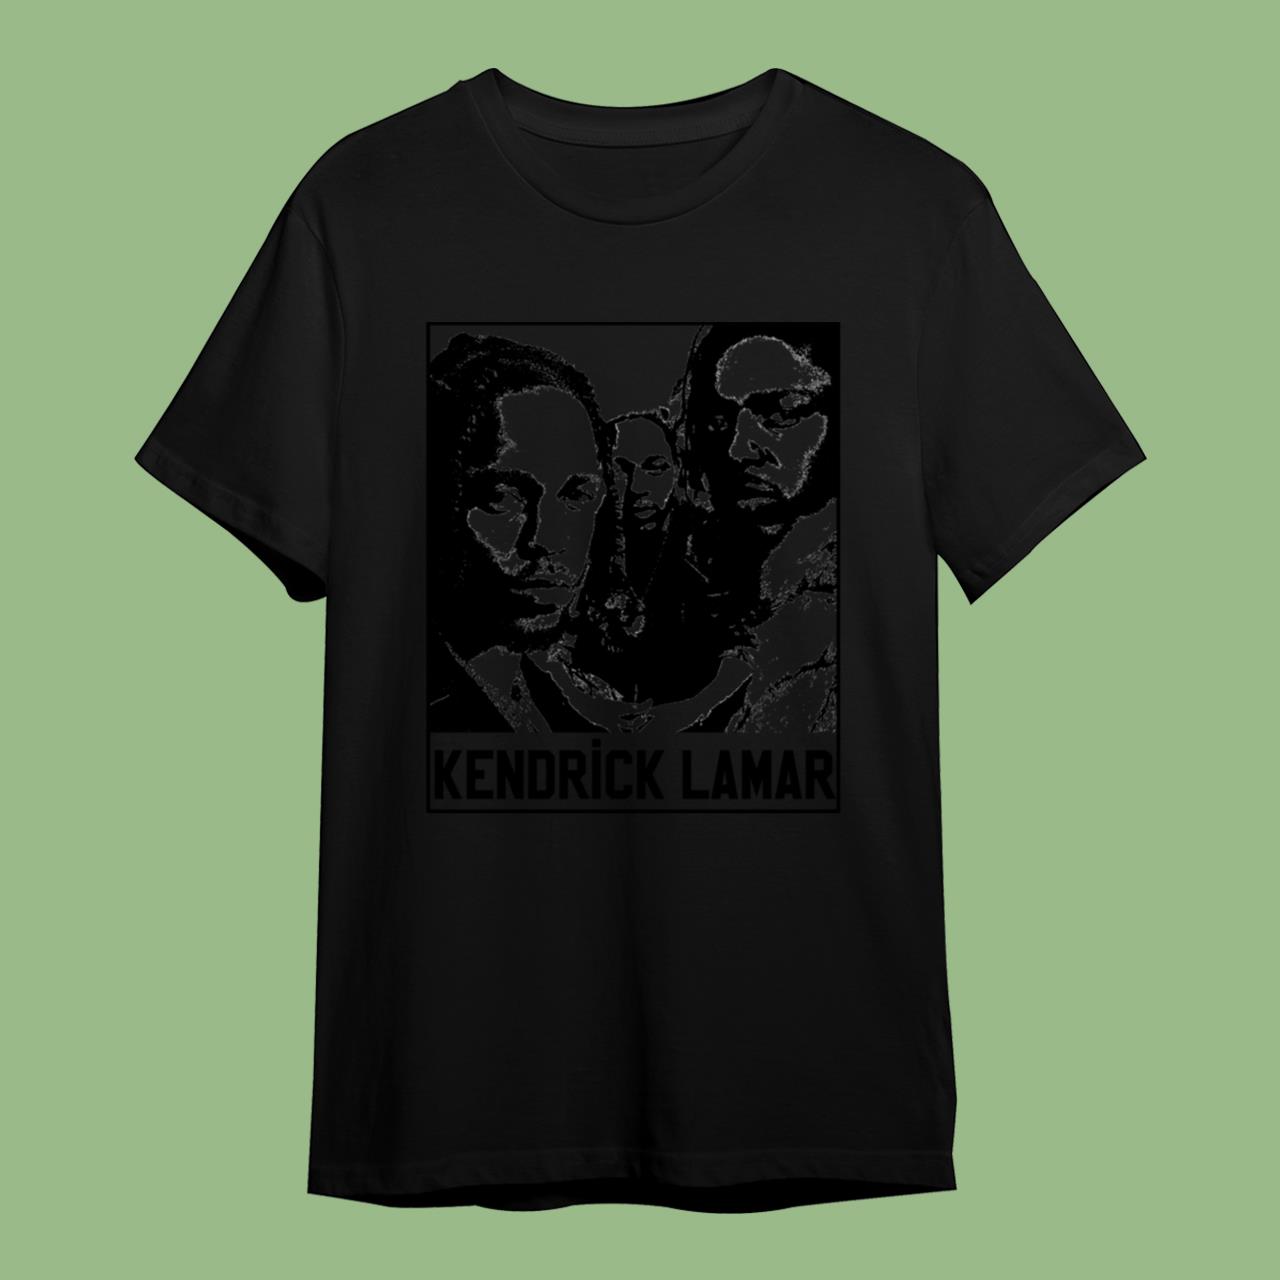 Kendrick Lamar Cool Potrait T-Shirt